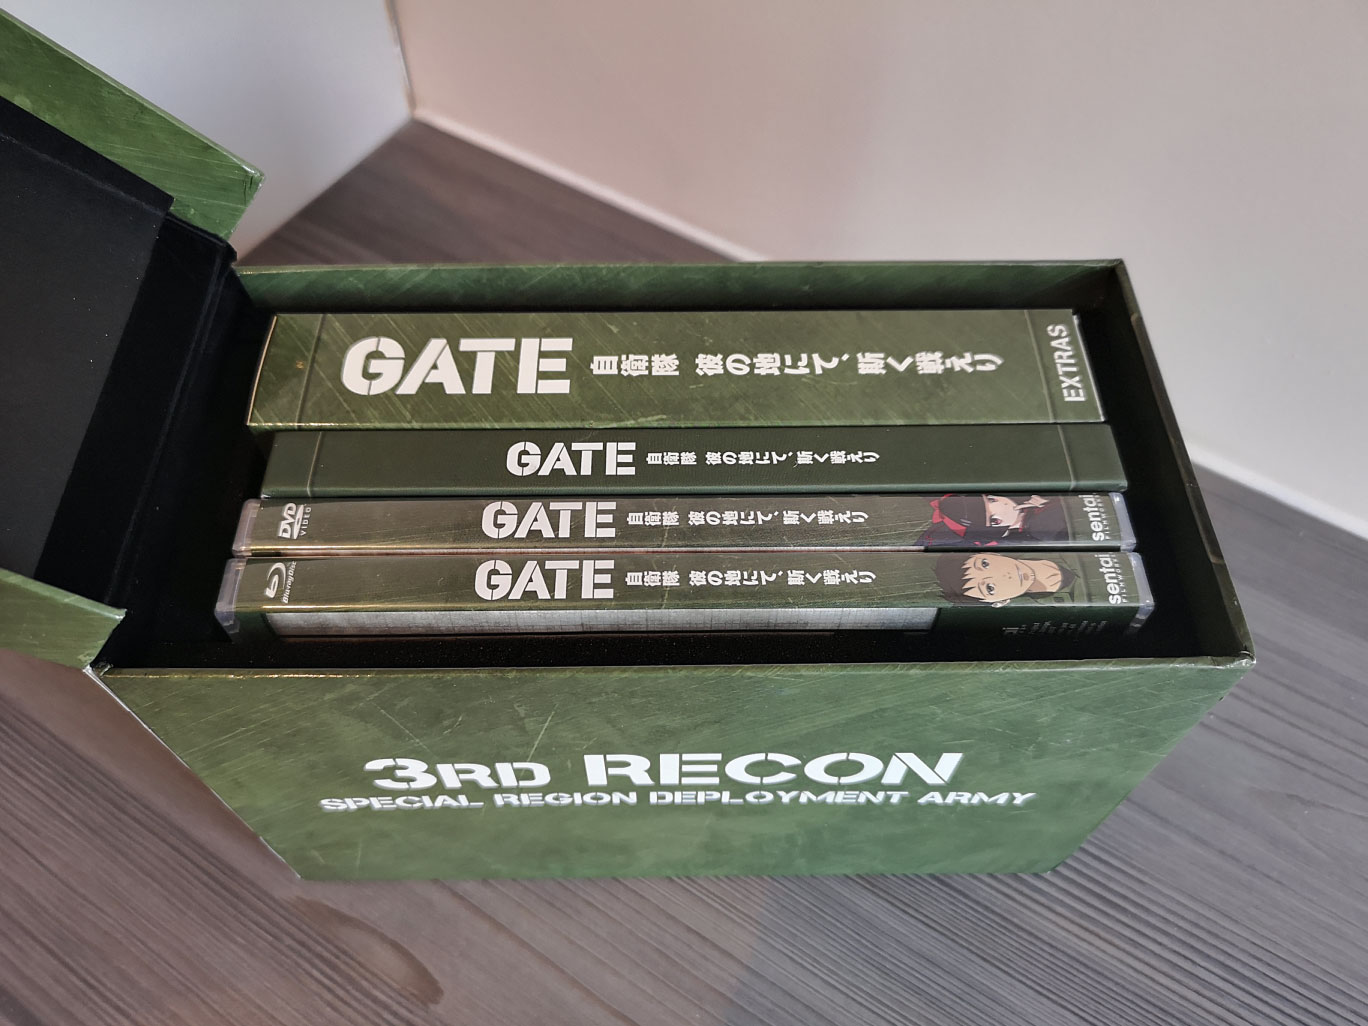 Gate: Jieitai Kanochi Nite, Kaku Tatakaeri Blu-ray Box 1 [Limited